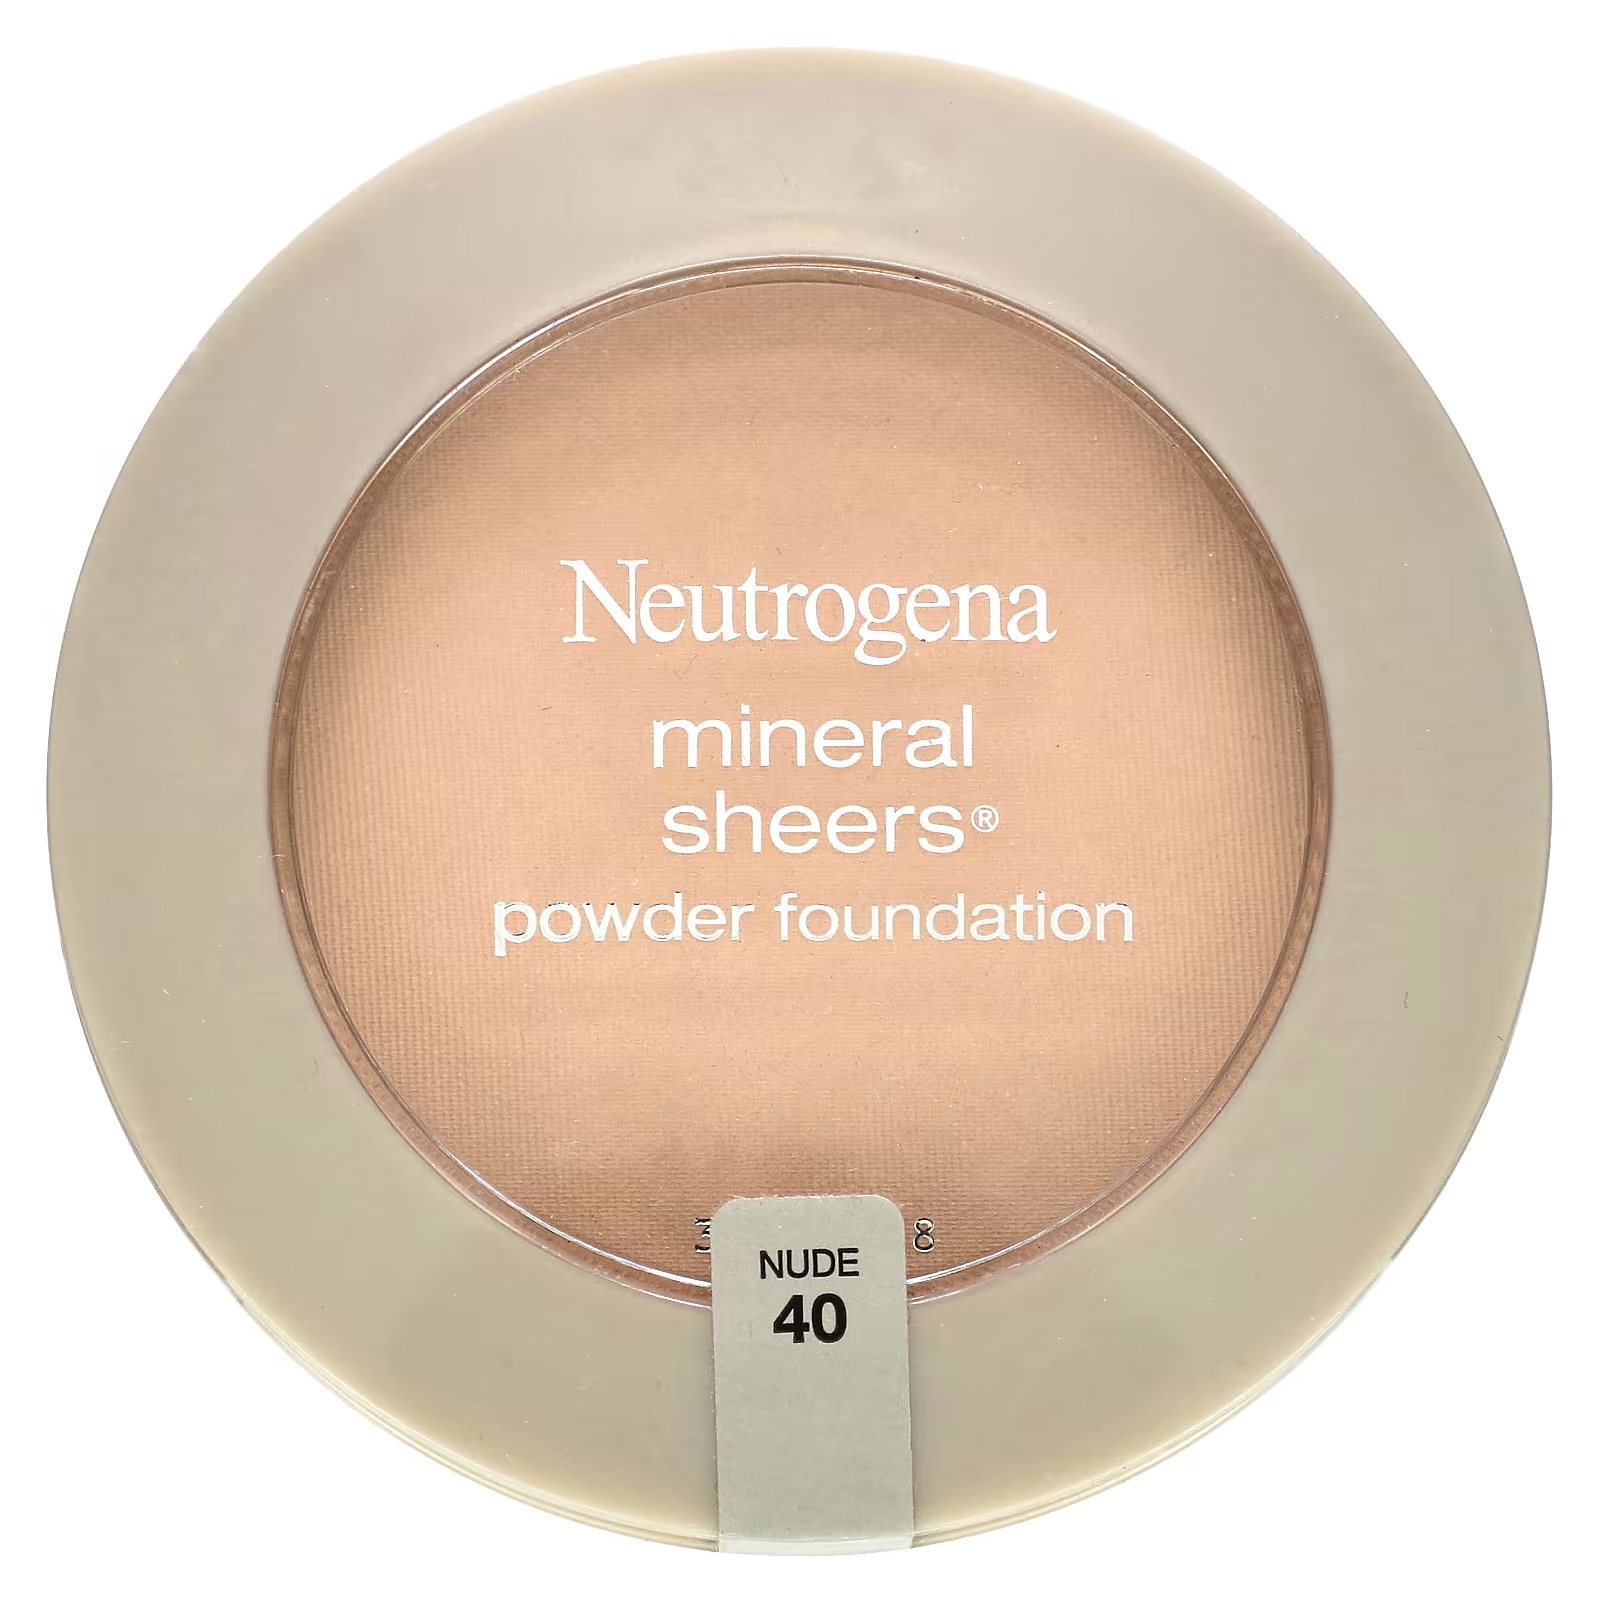 Neutrogena Mineral Sheers Пудра-пудра телесного цвета 40, 0,34 унции (9,6 г) neutrogena пудра для контроля блеска 10 4 г 0 37 унции